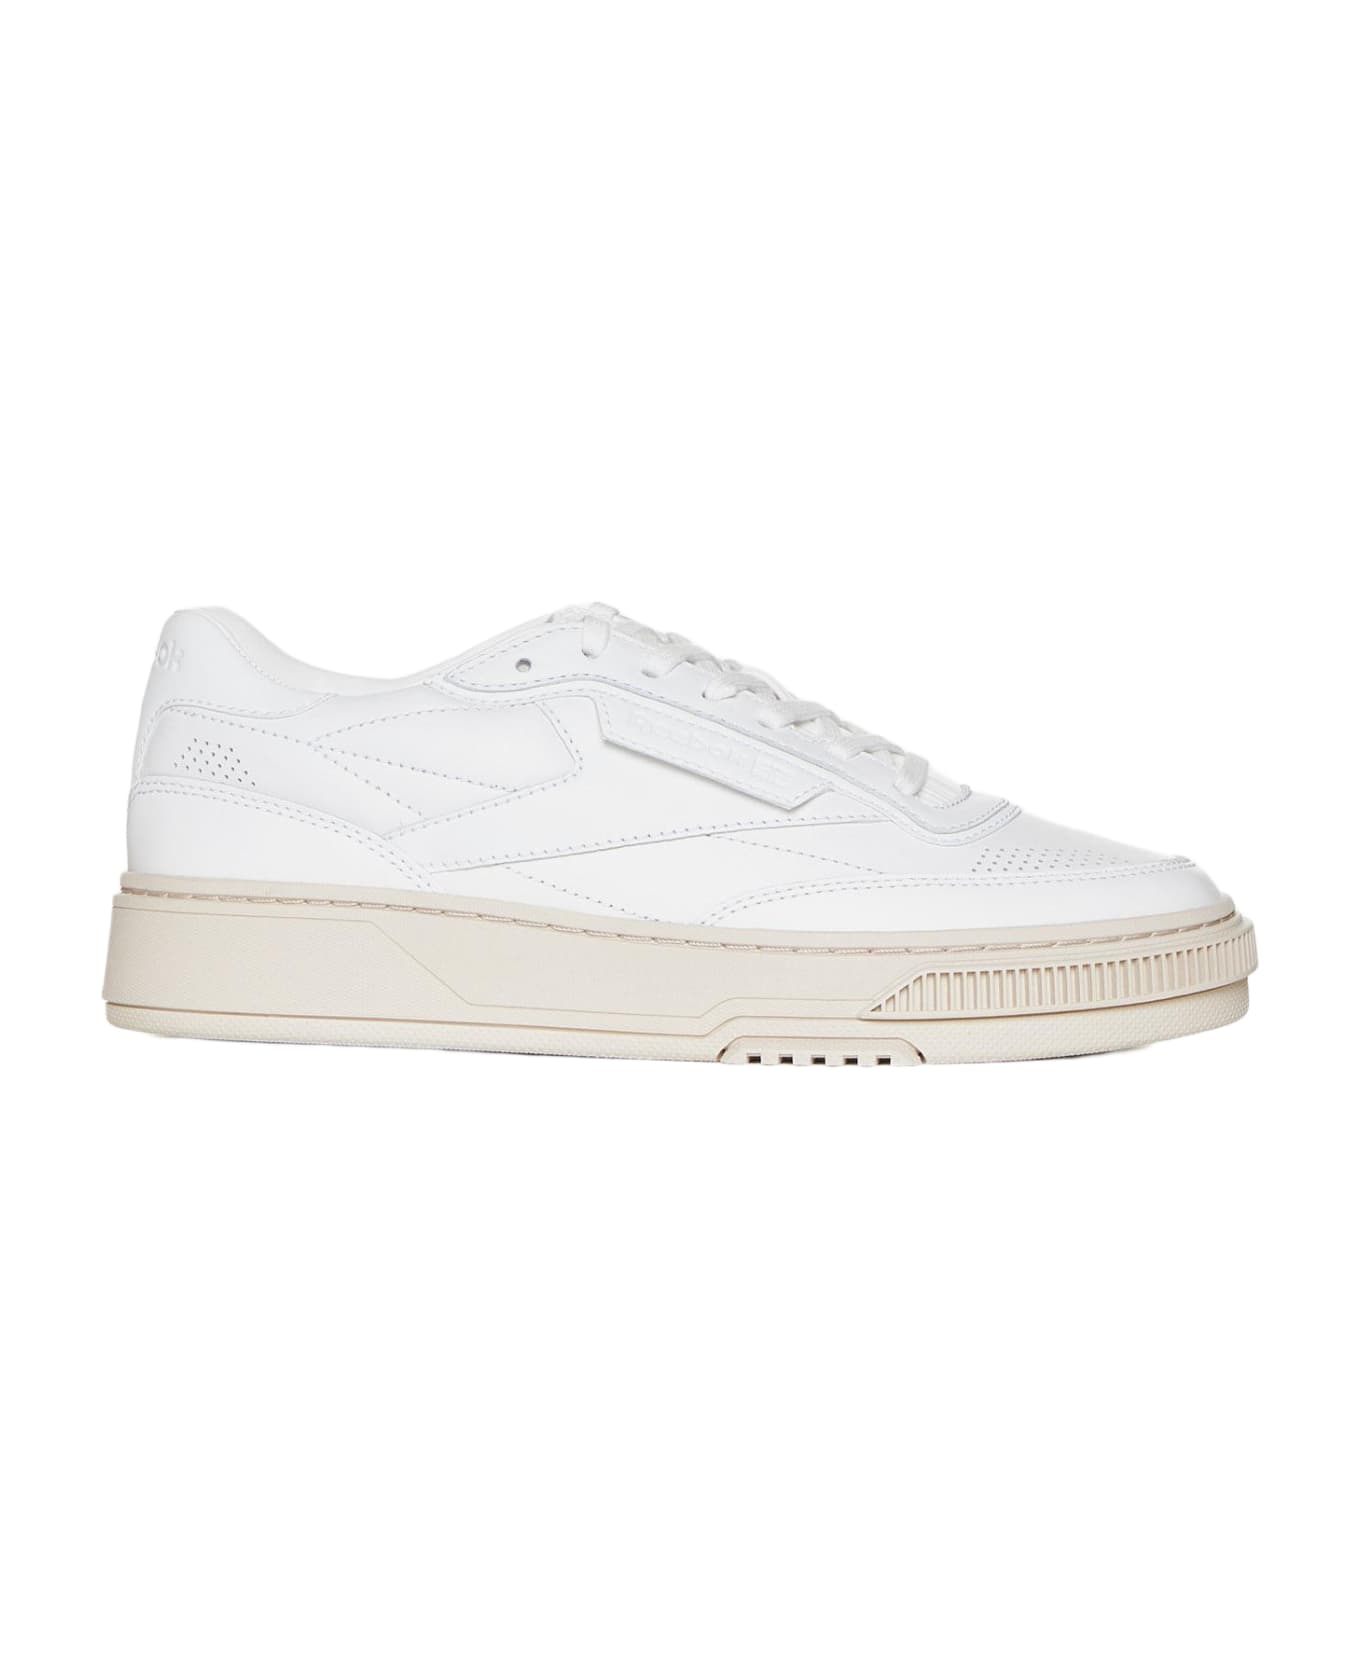 Reebok Club C Ltd Leather Sneakers - White Lthe